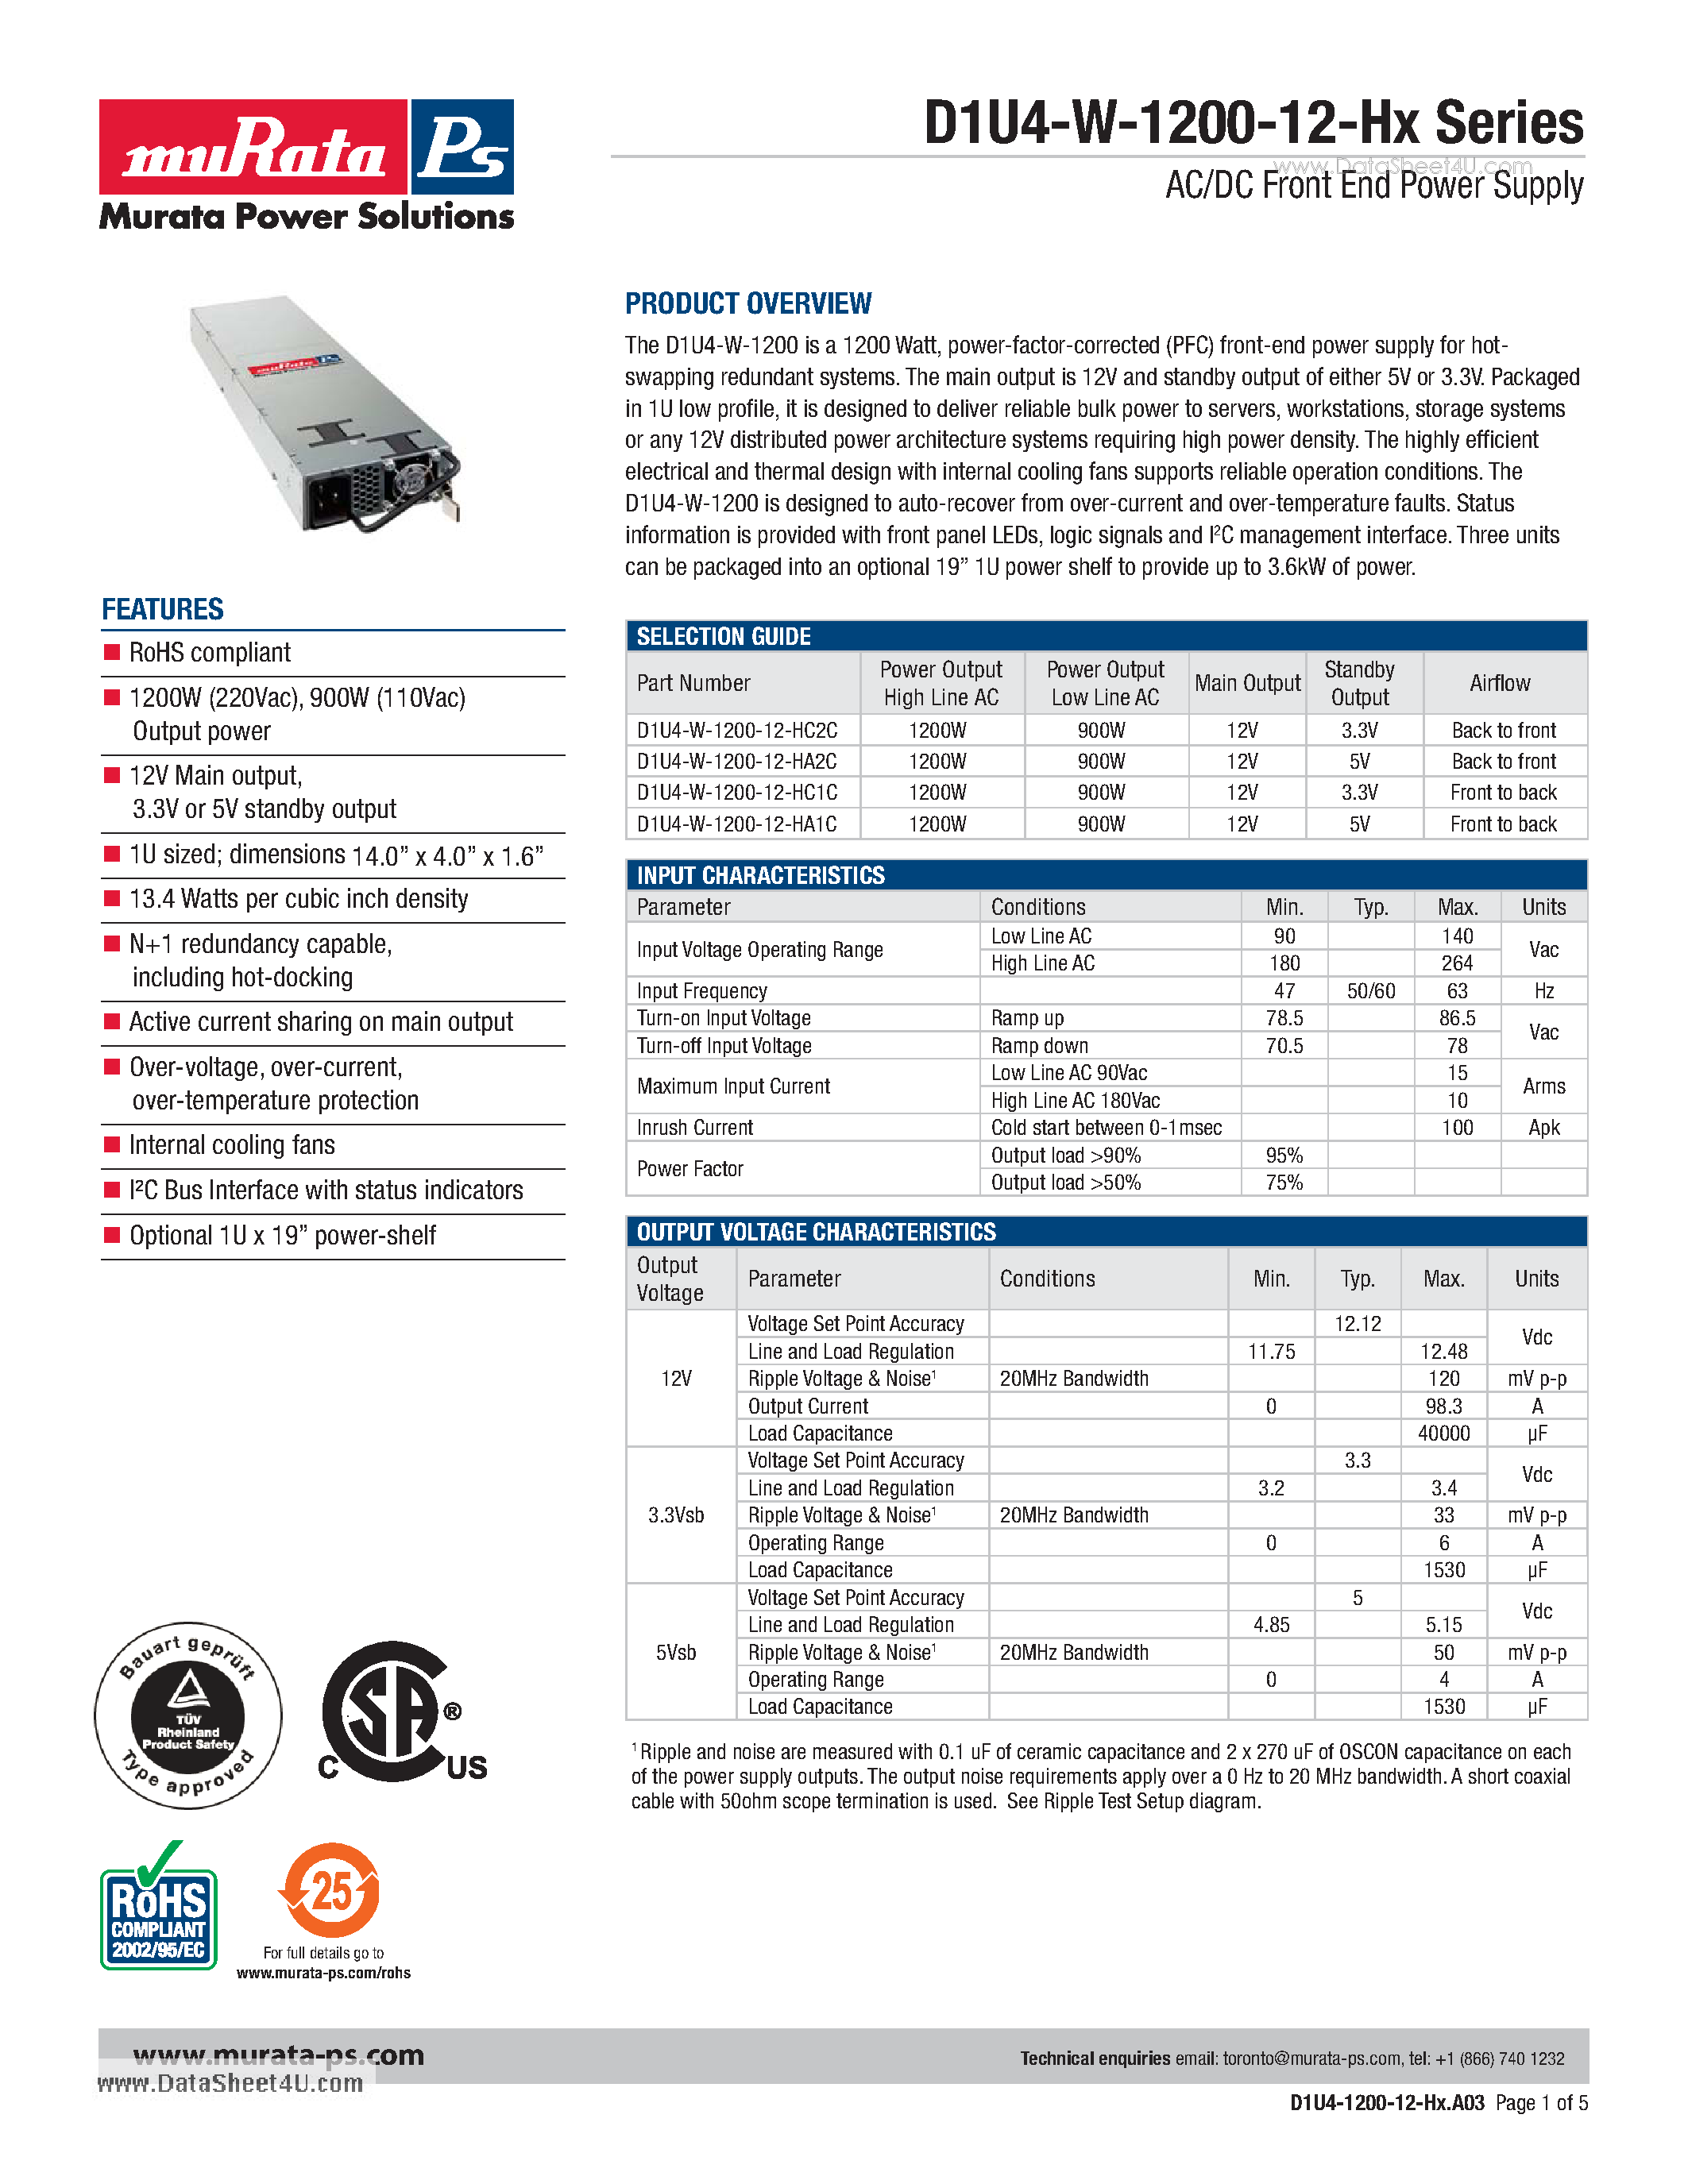 Datasheet D1U4-W-1200-12-Hx - AC/DC Front End Power Supply page 1